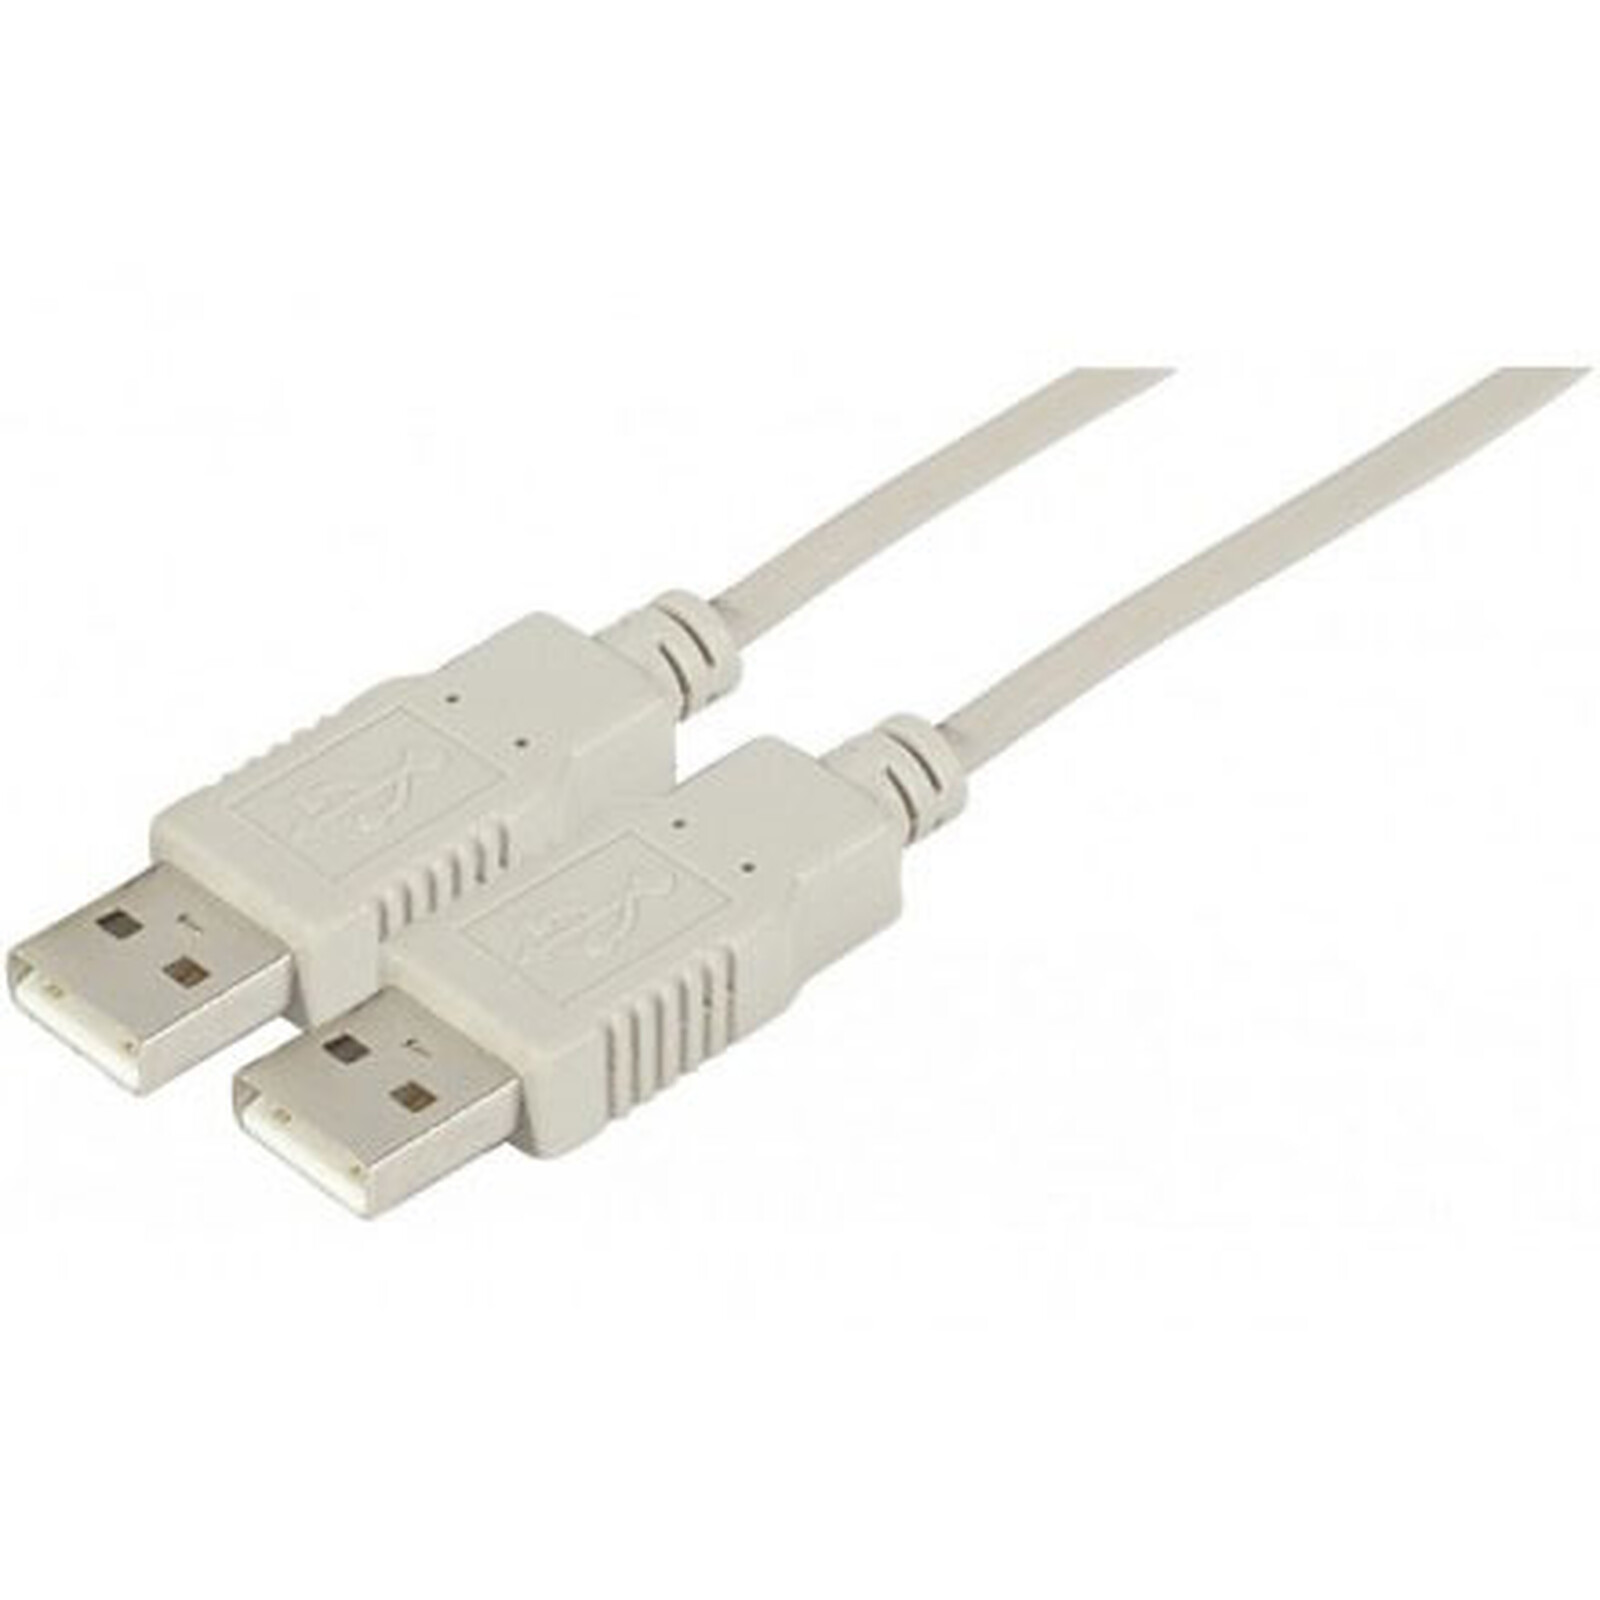 König Câble USB 2.0 A Male 2 m Gris 